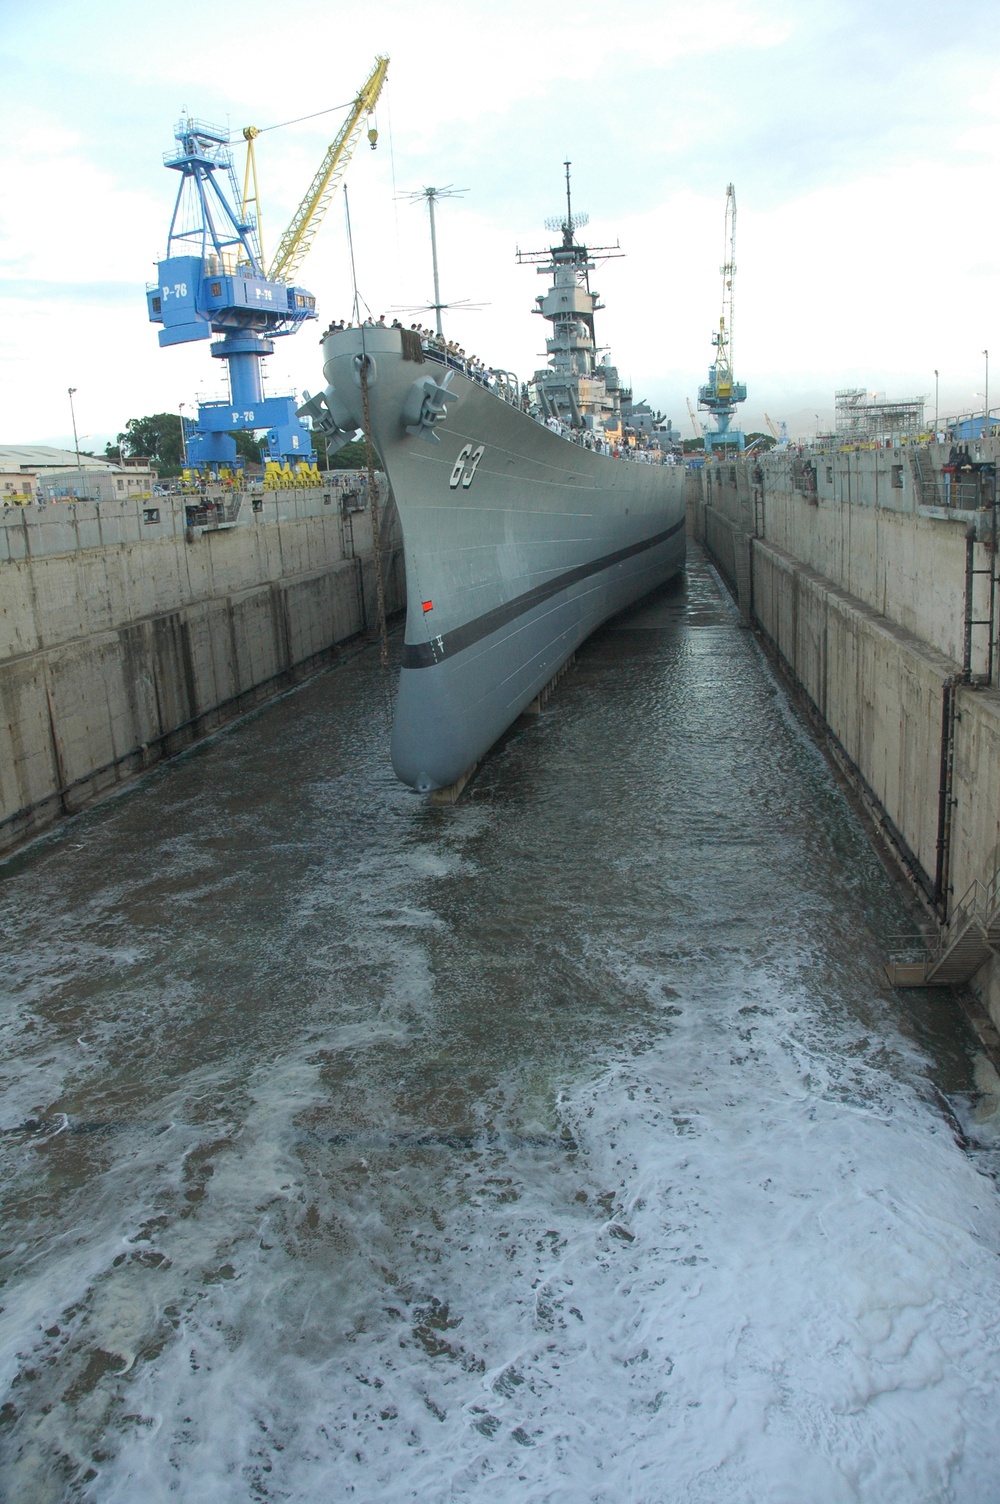 The Battleship Missouri rests on blocks at Pearl Harbor Naval Shipyard